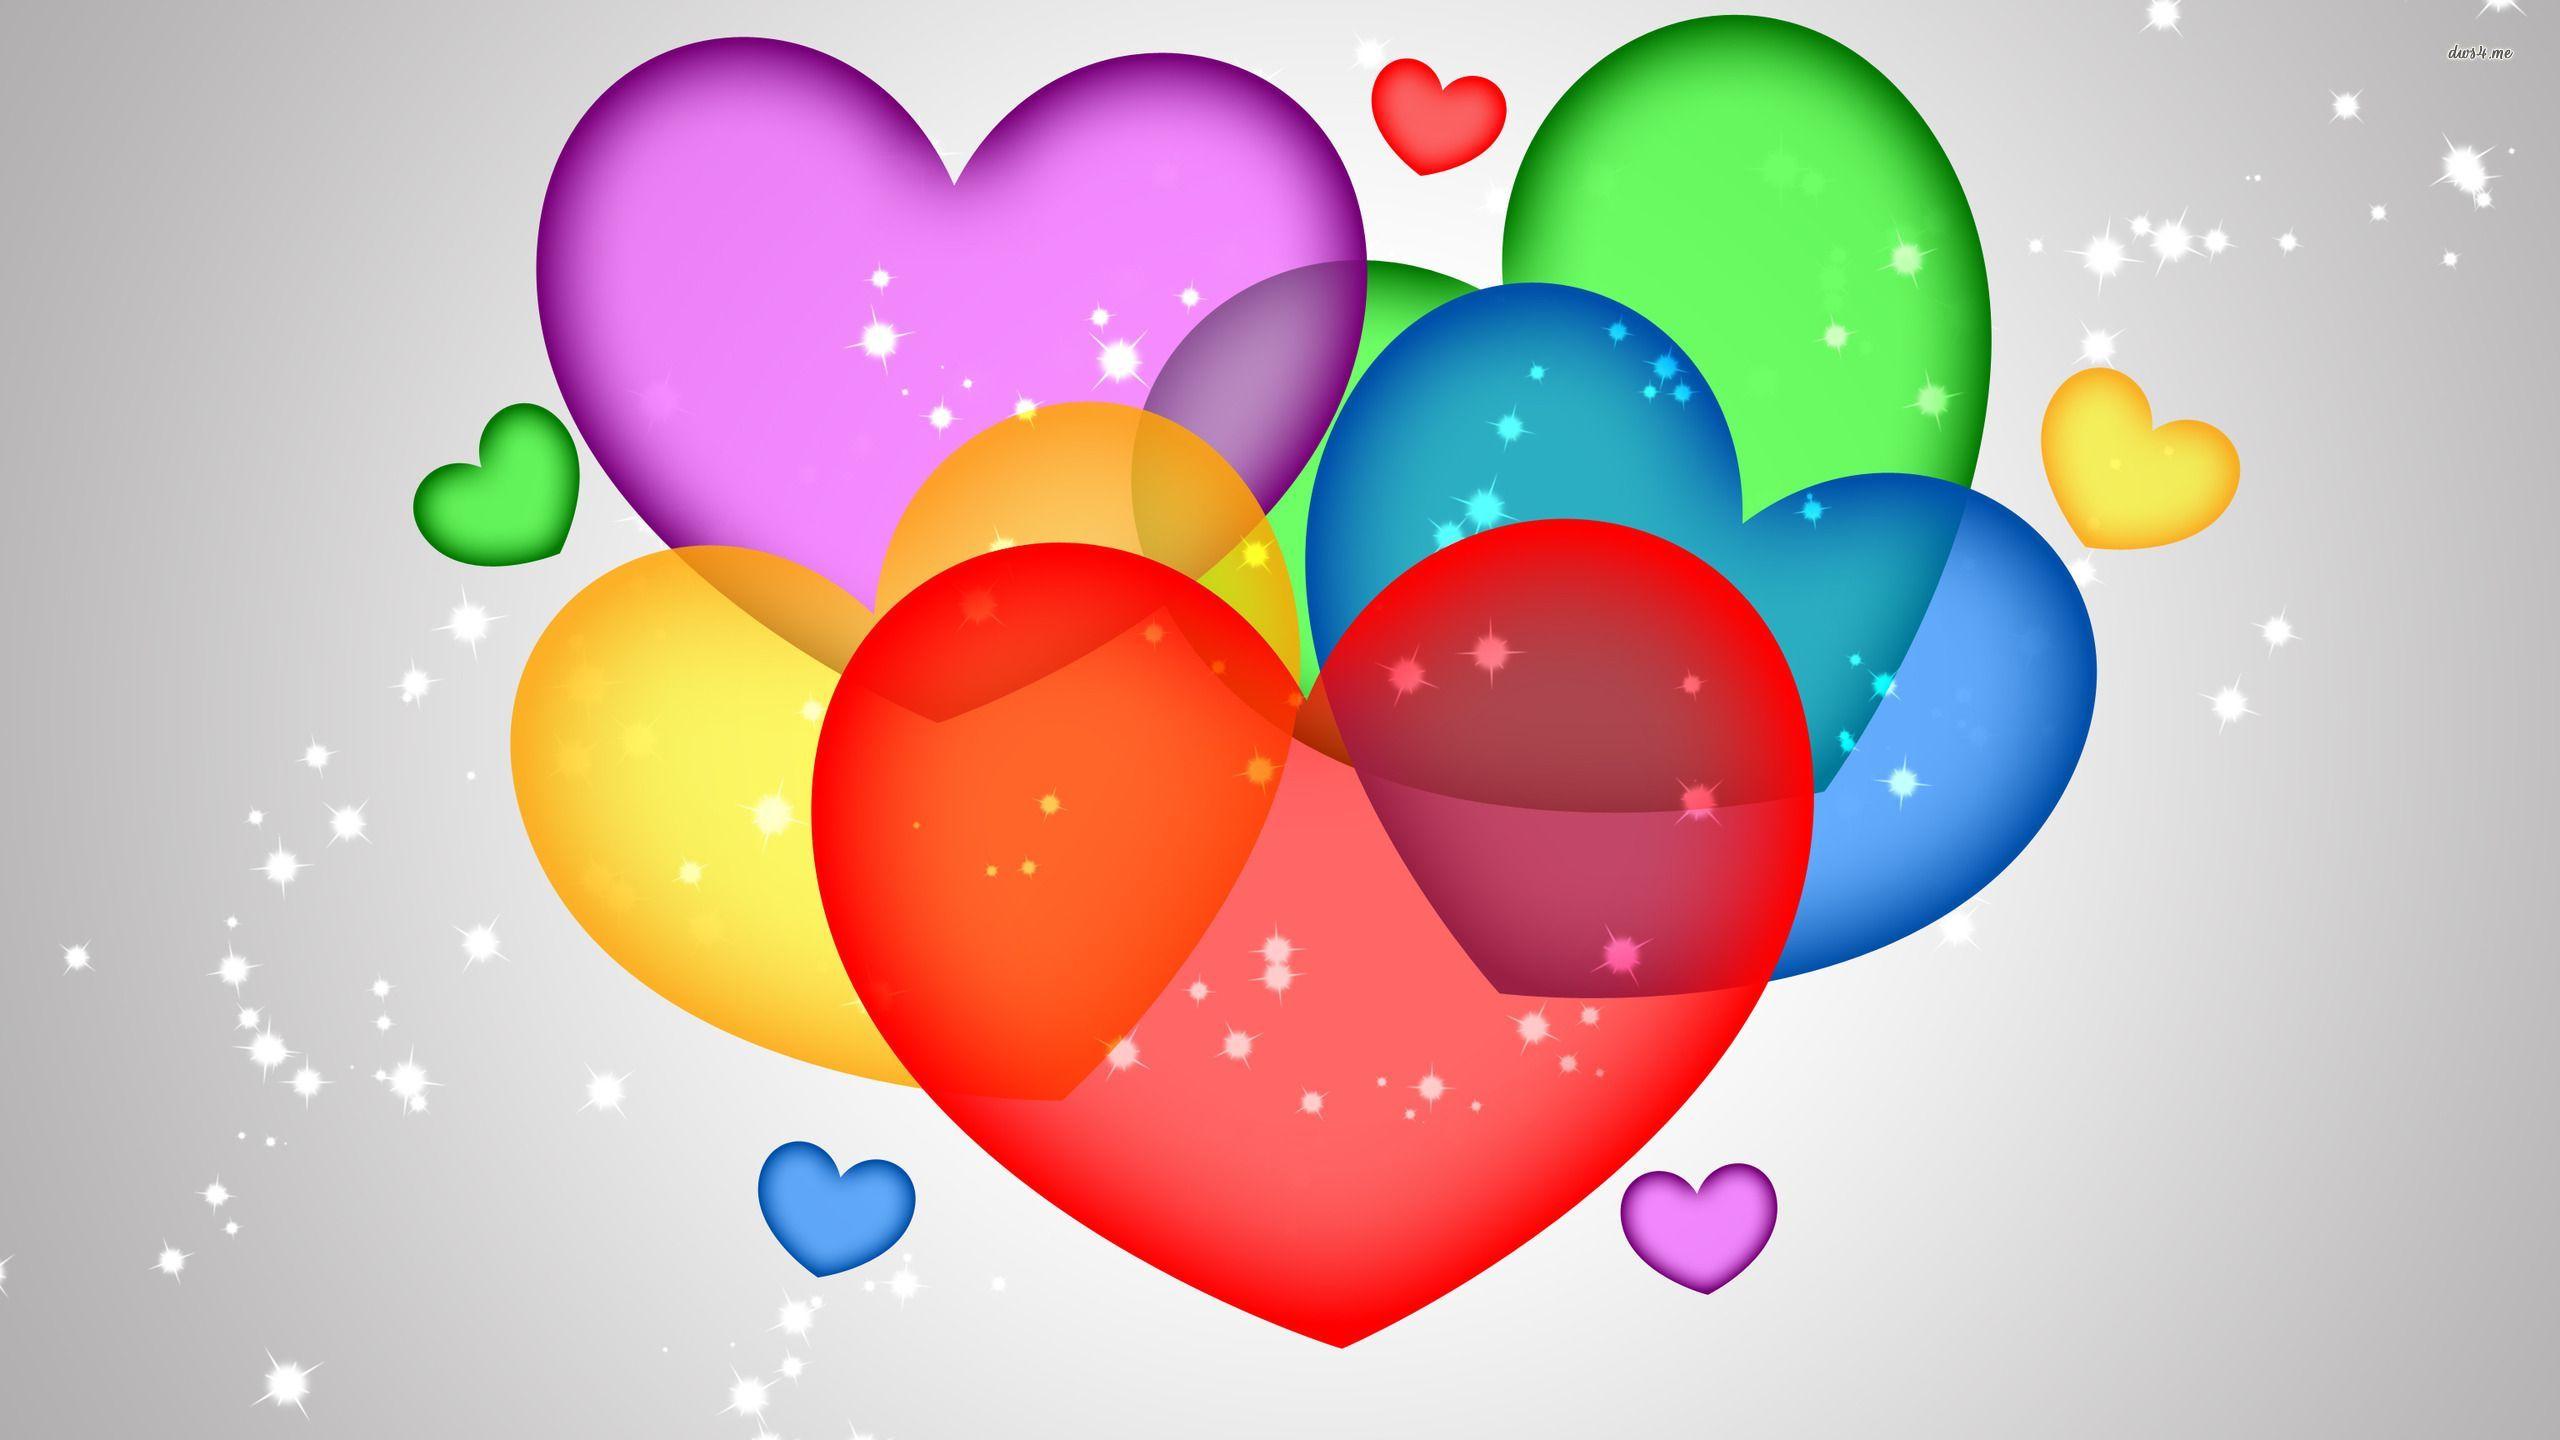 Beautiful Love & Heart Wallpaper. Tech Lovers L Web Design